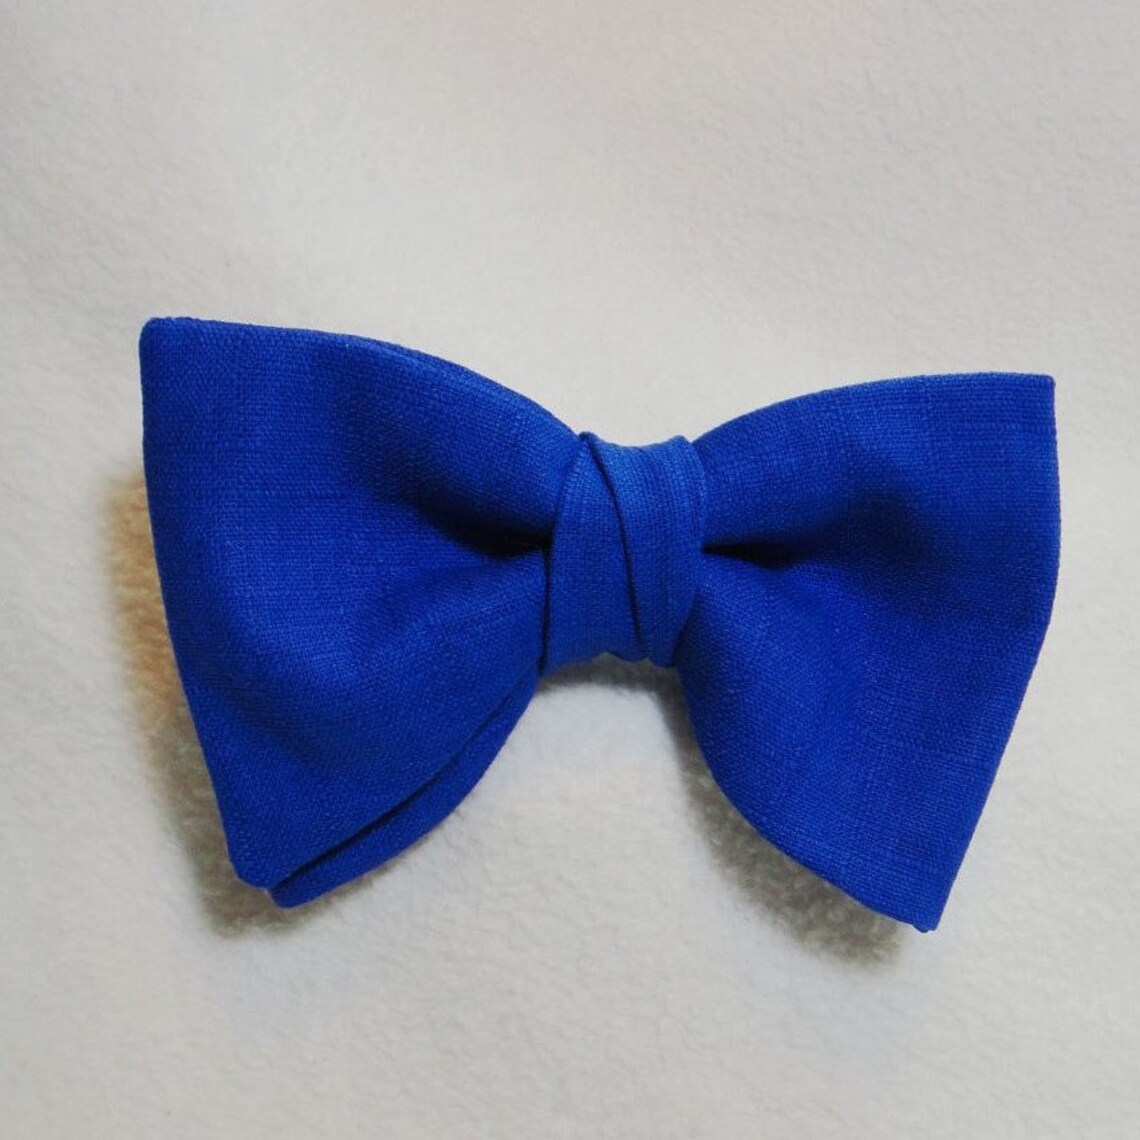 Blue dog tie Large butterfly bow tie Pet tie Dark blue | Etsy